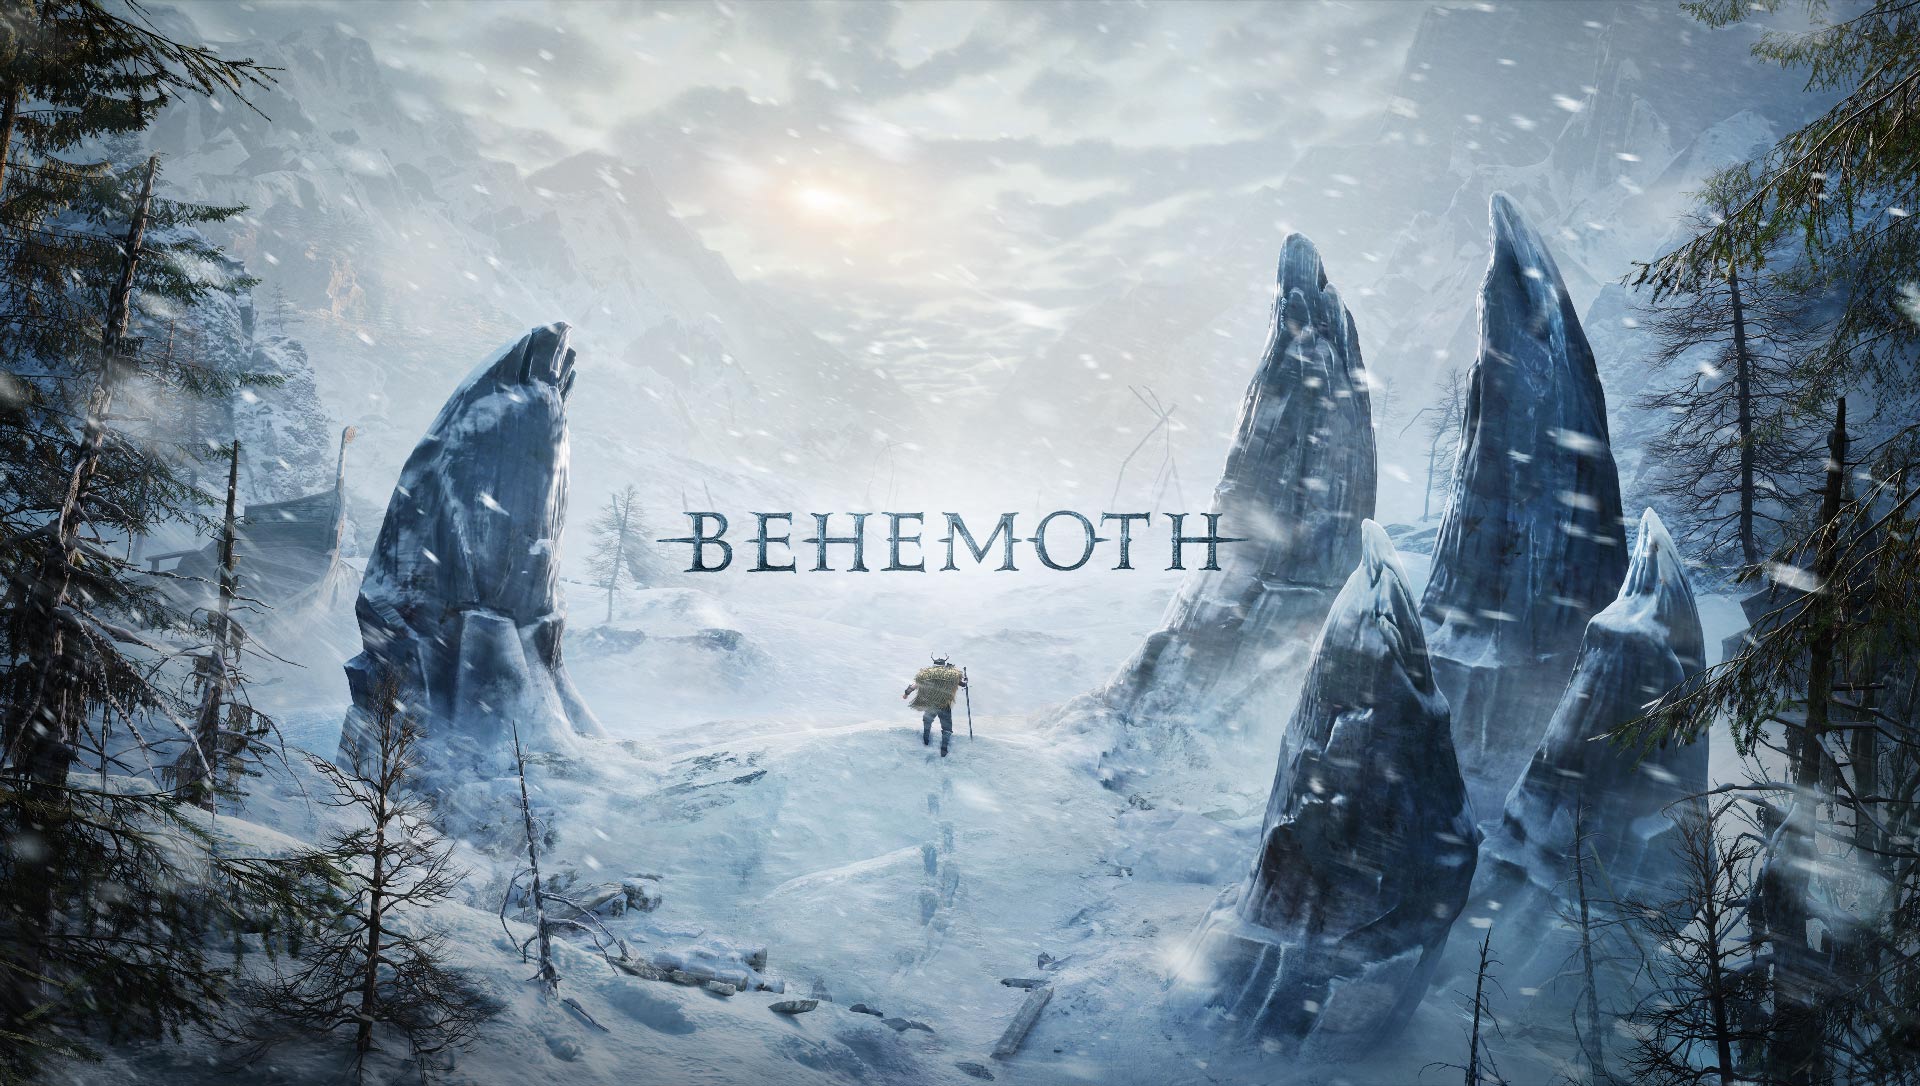 Saints & Sinners’ Studio Reveals Next VR game, ‘Behemoth’ – Road to VR